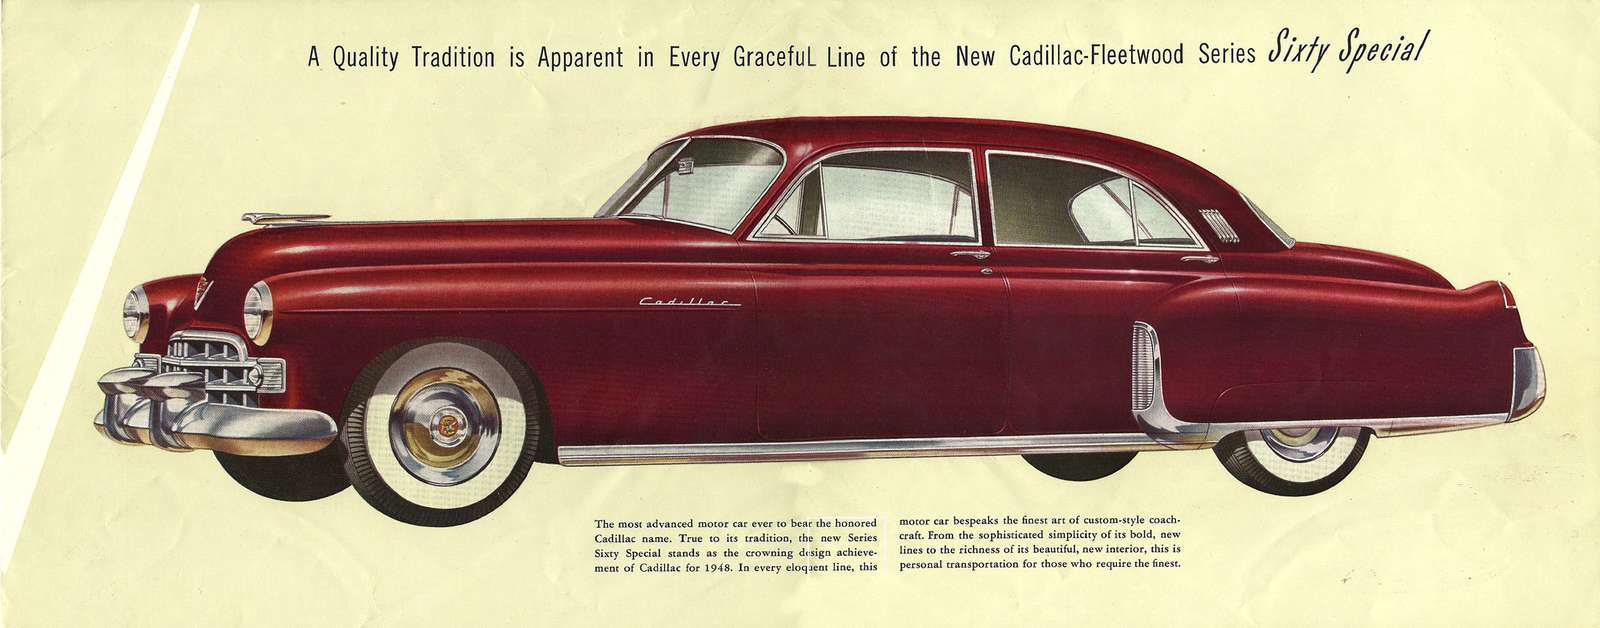 Cadillac vörös gjhyyop puzzle online fotóról